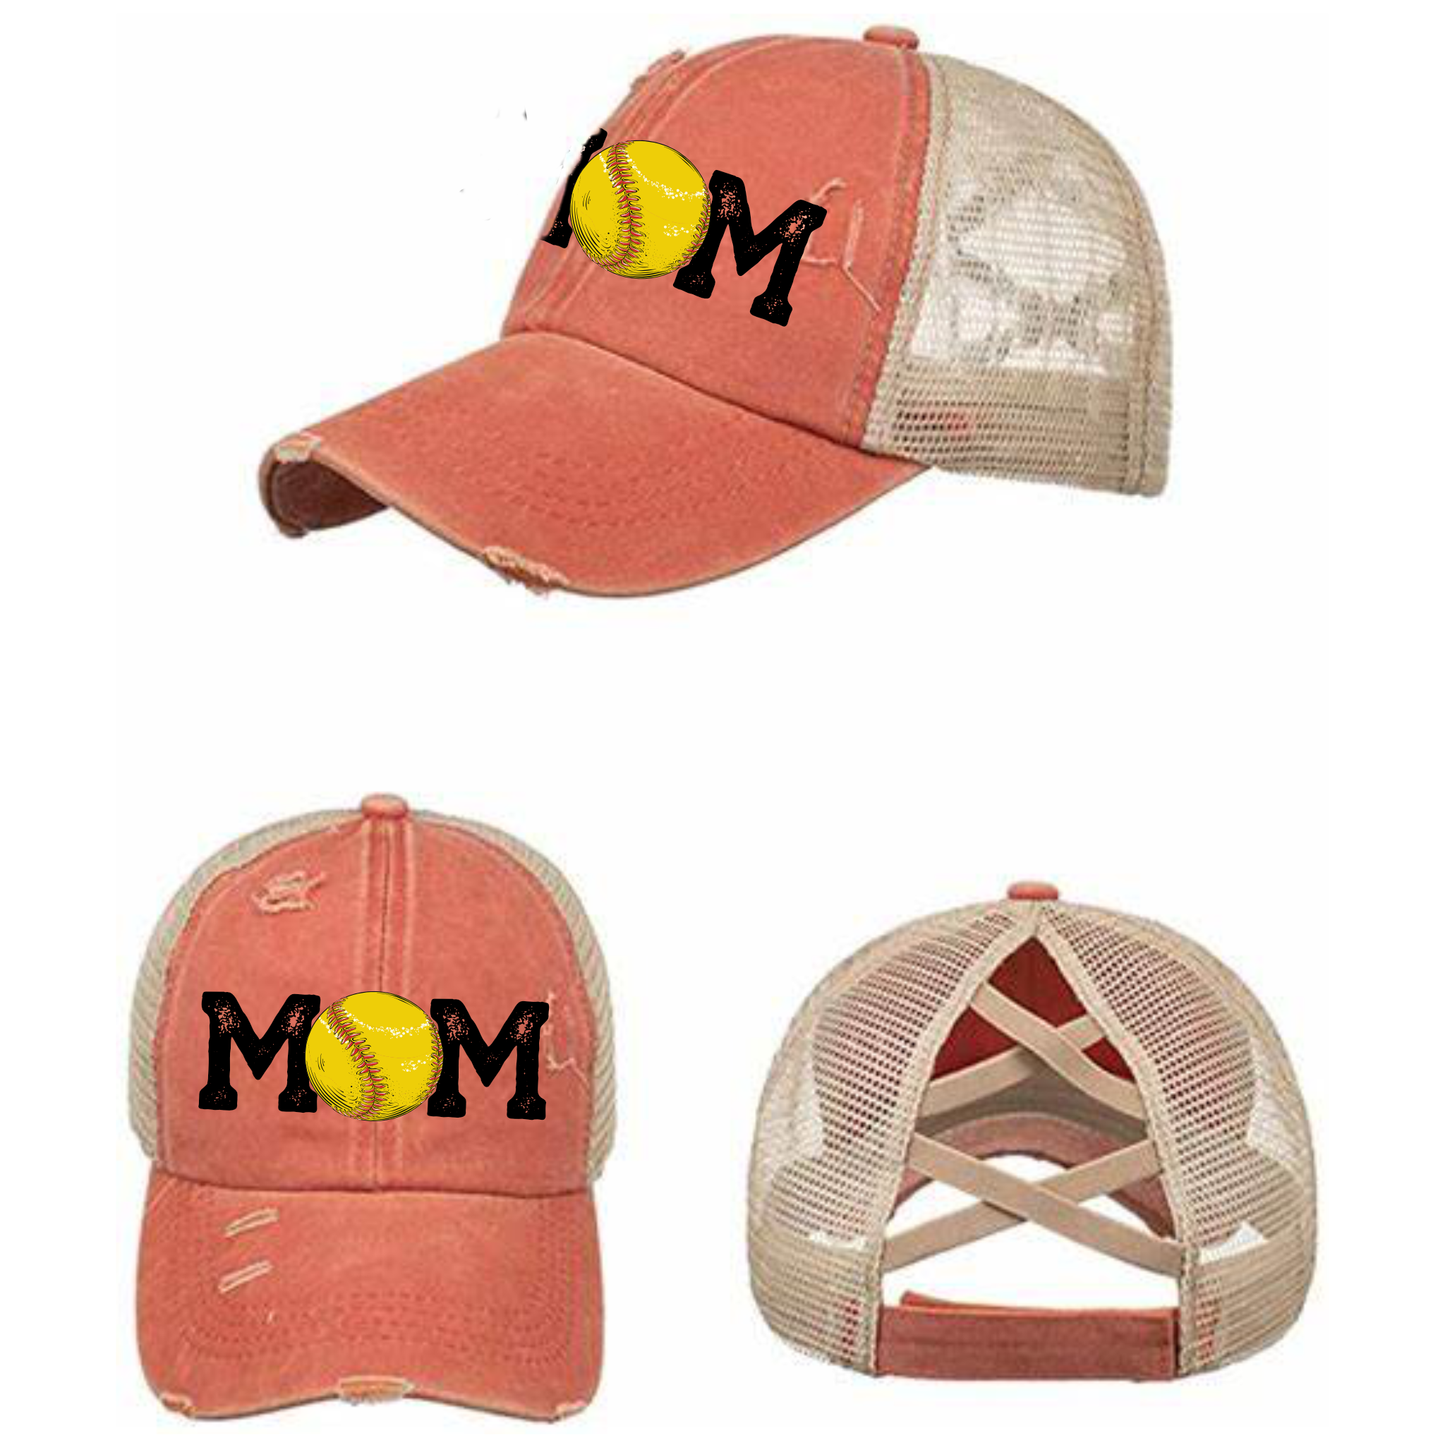 Softball Mom Criss Cross Hat - Red, Mint & Charcoal